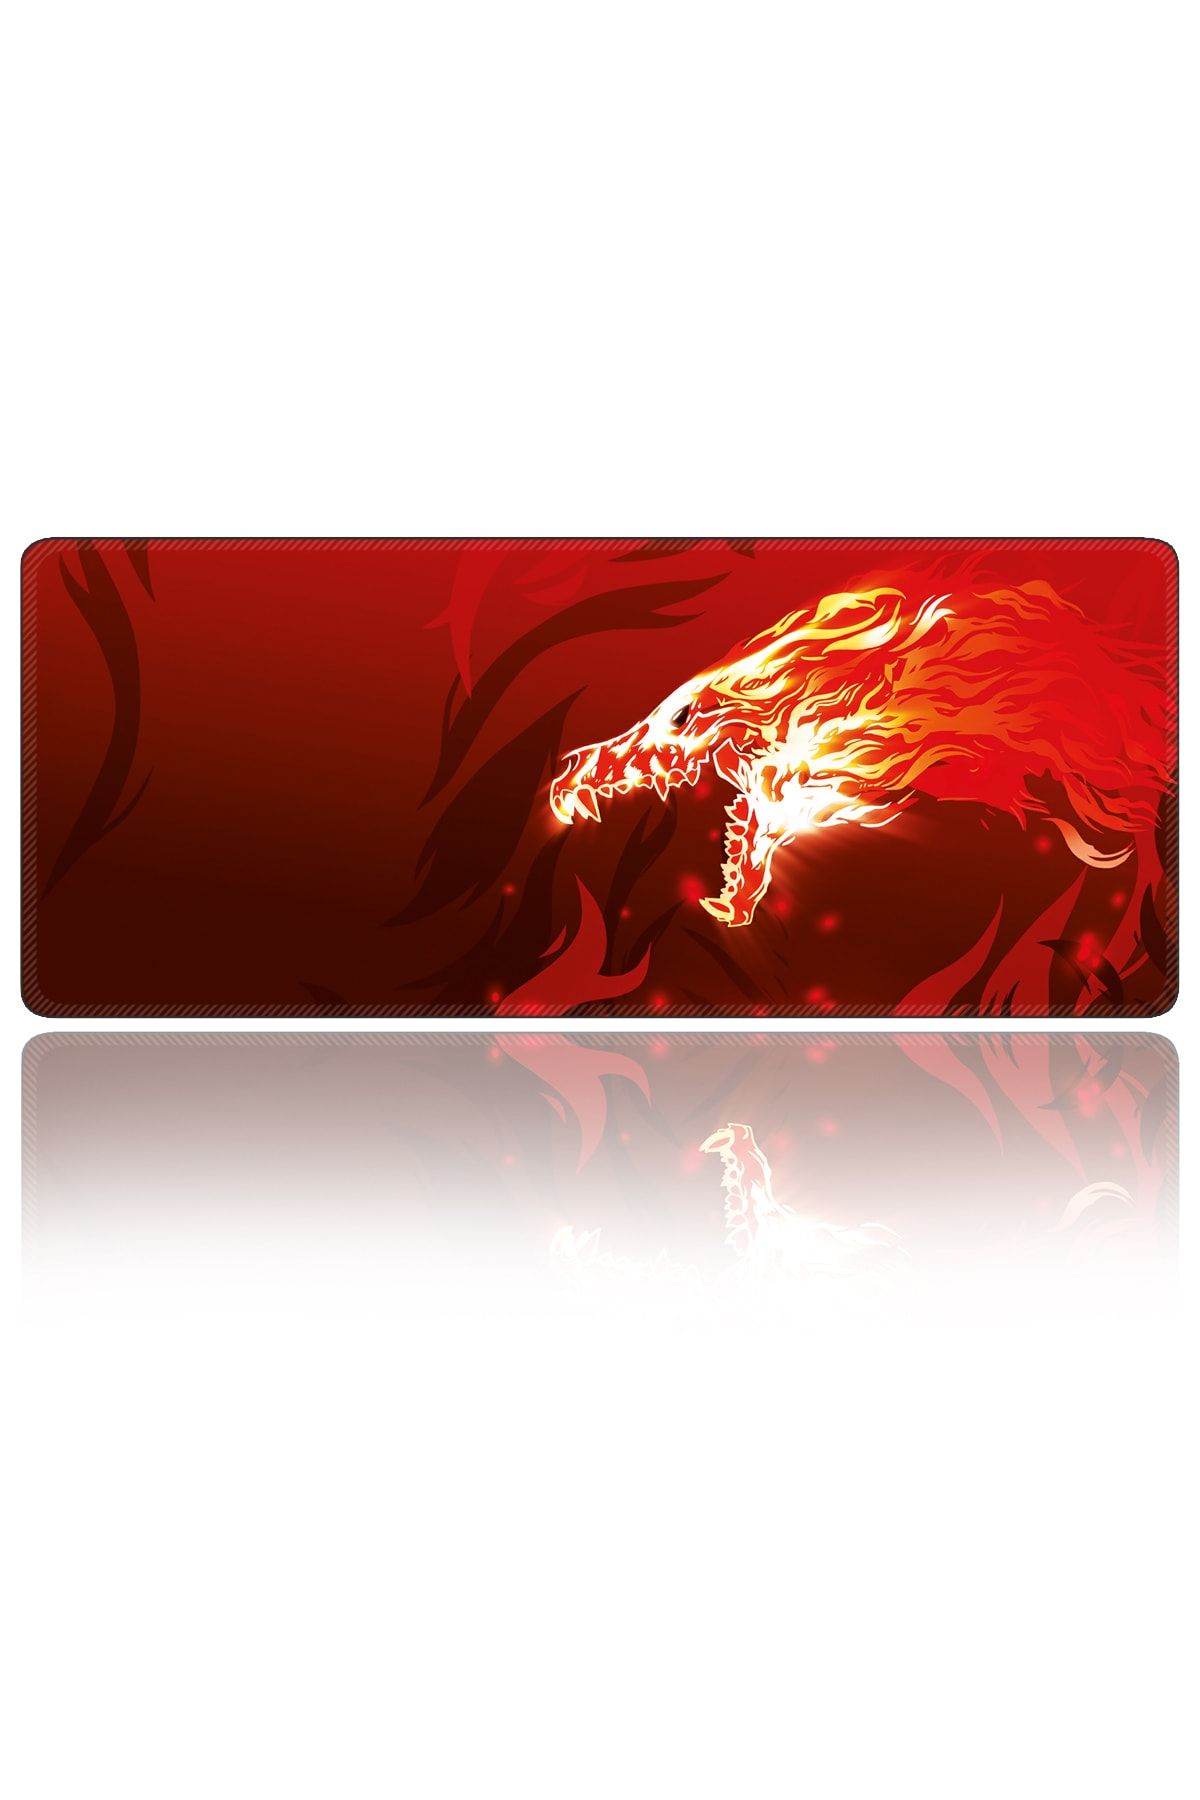 Xrades Red Dragon 90x40 Cm Xxl Gaming Oyuncu Mousepad Mouse Pad